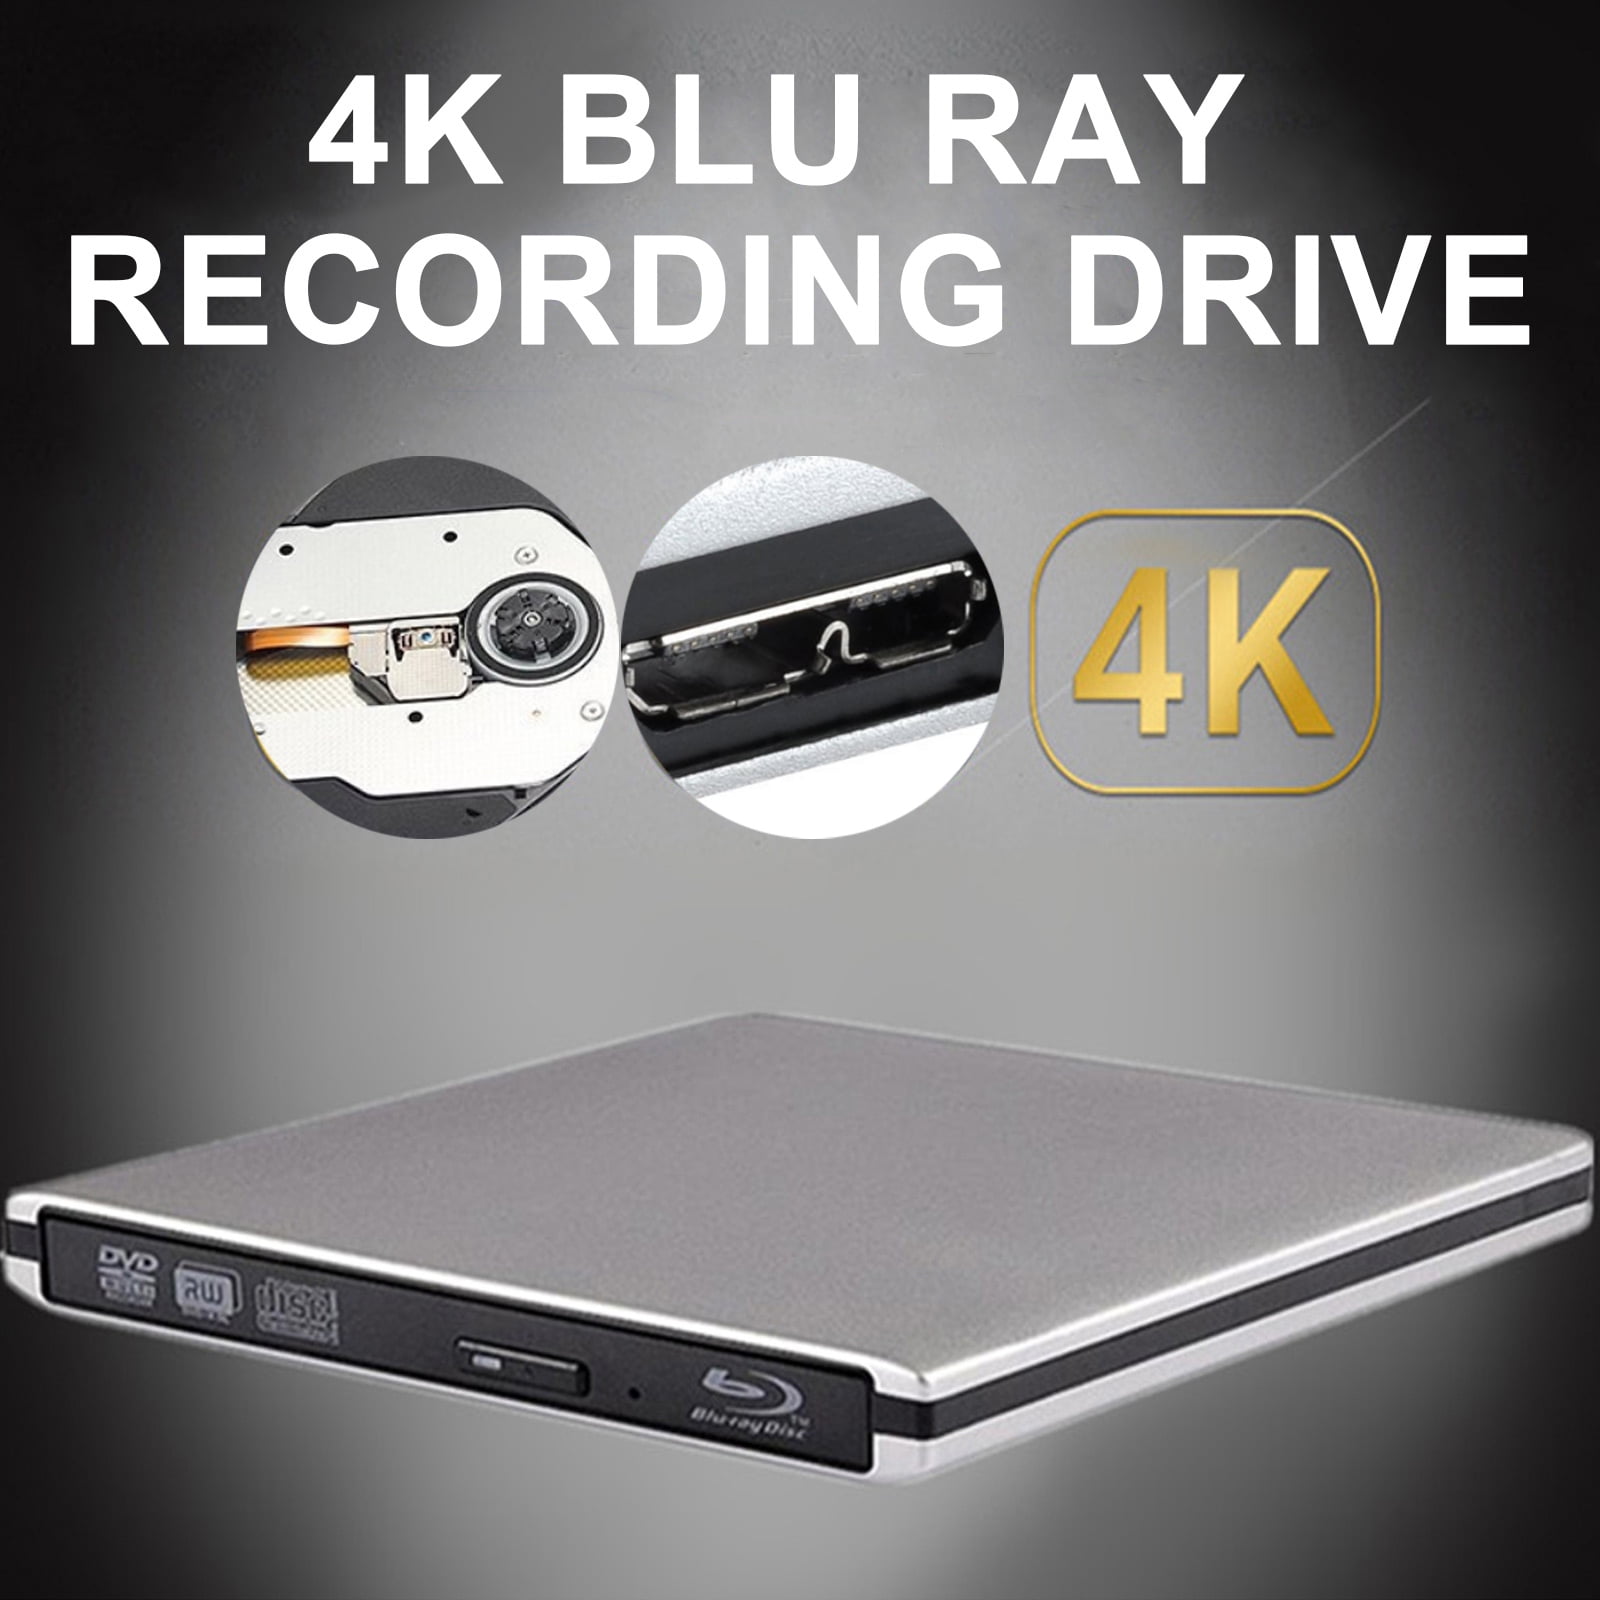 Genuine Bluray Burner External USB 3.0 Super Slim DVD BD Drive Silver - Walmart.com